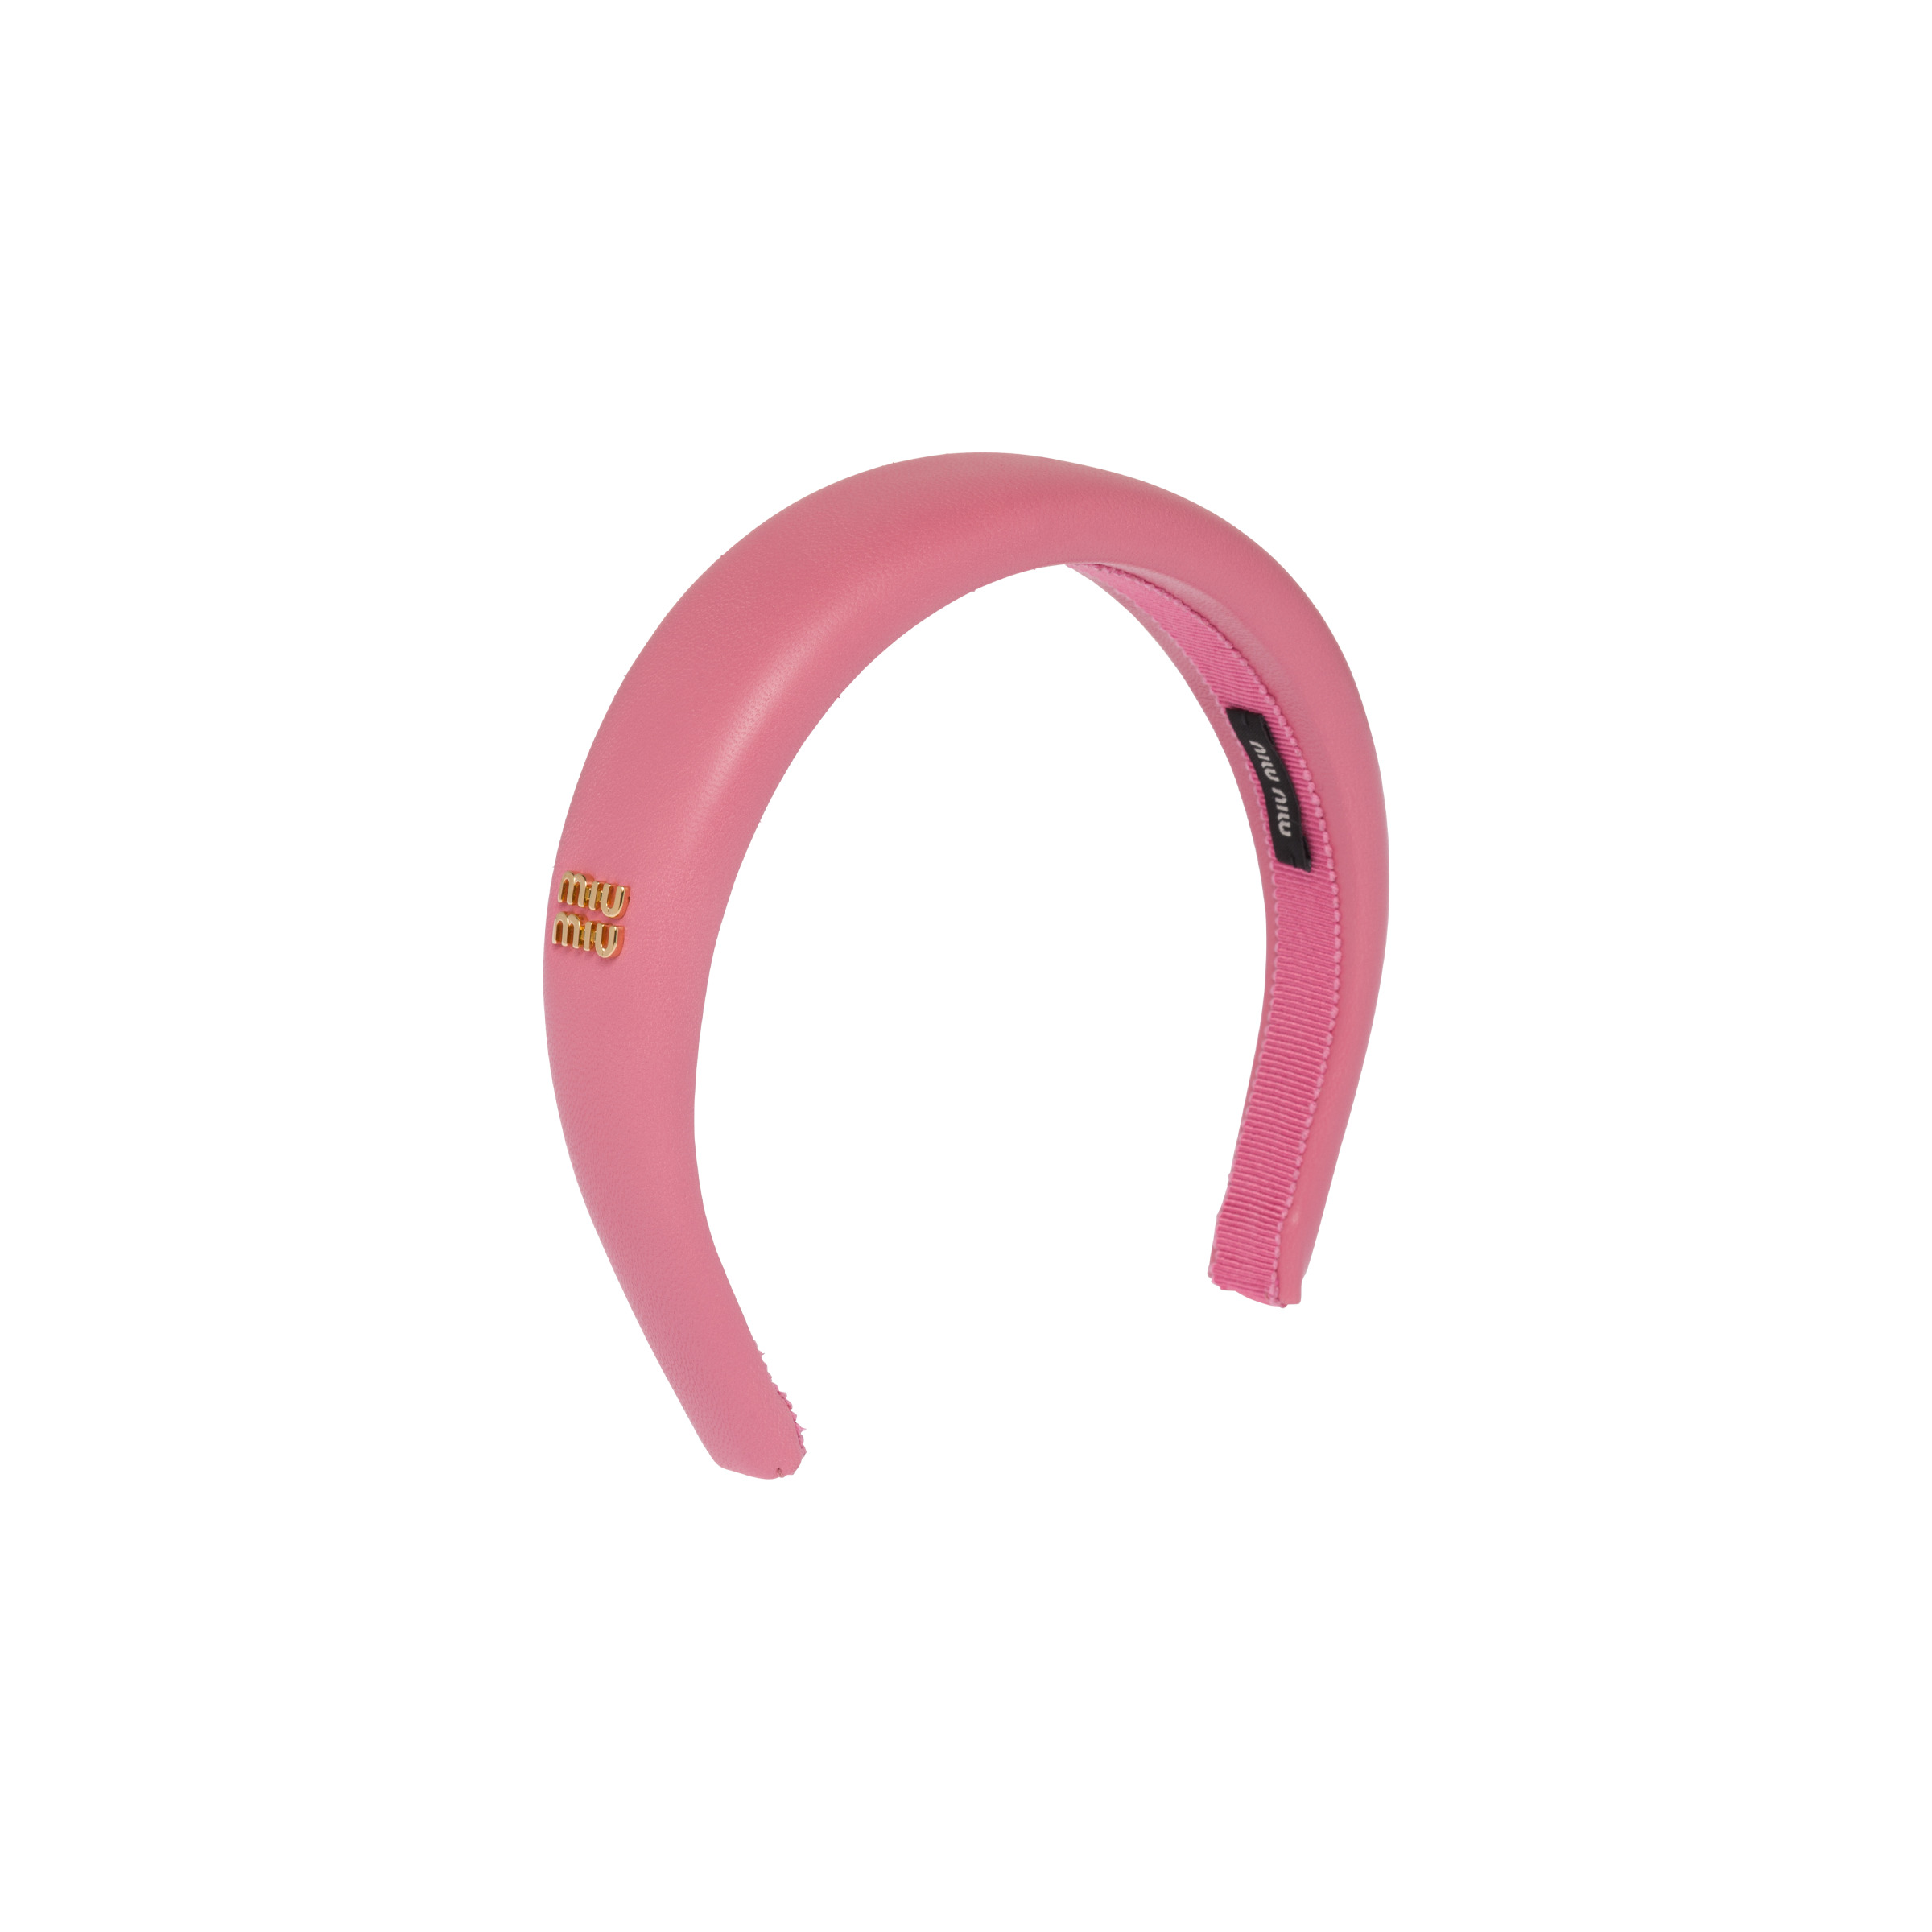 Nappa leather headband - 1